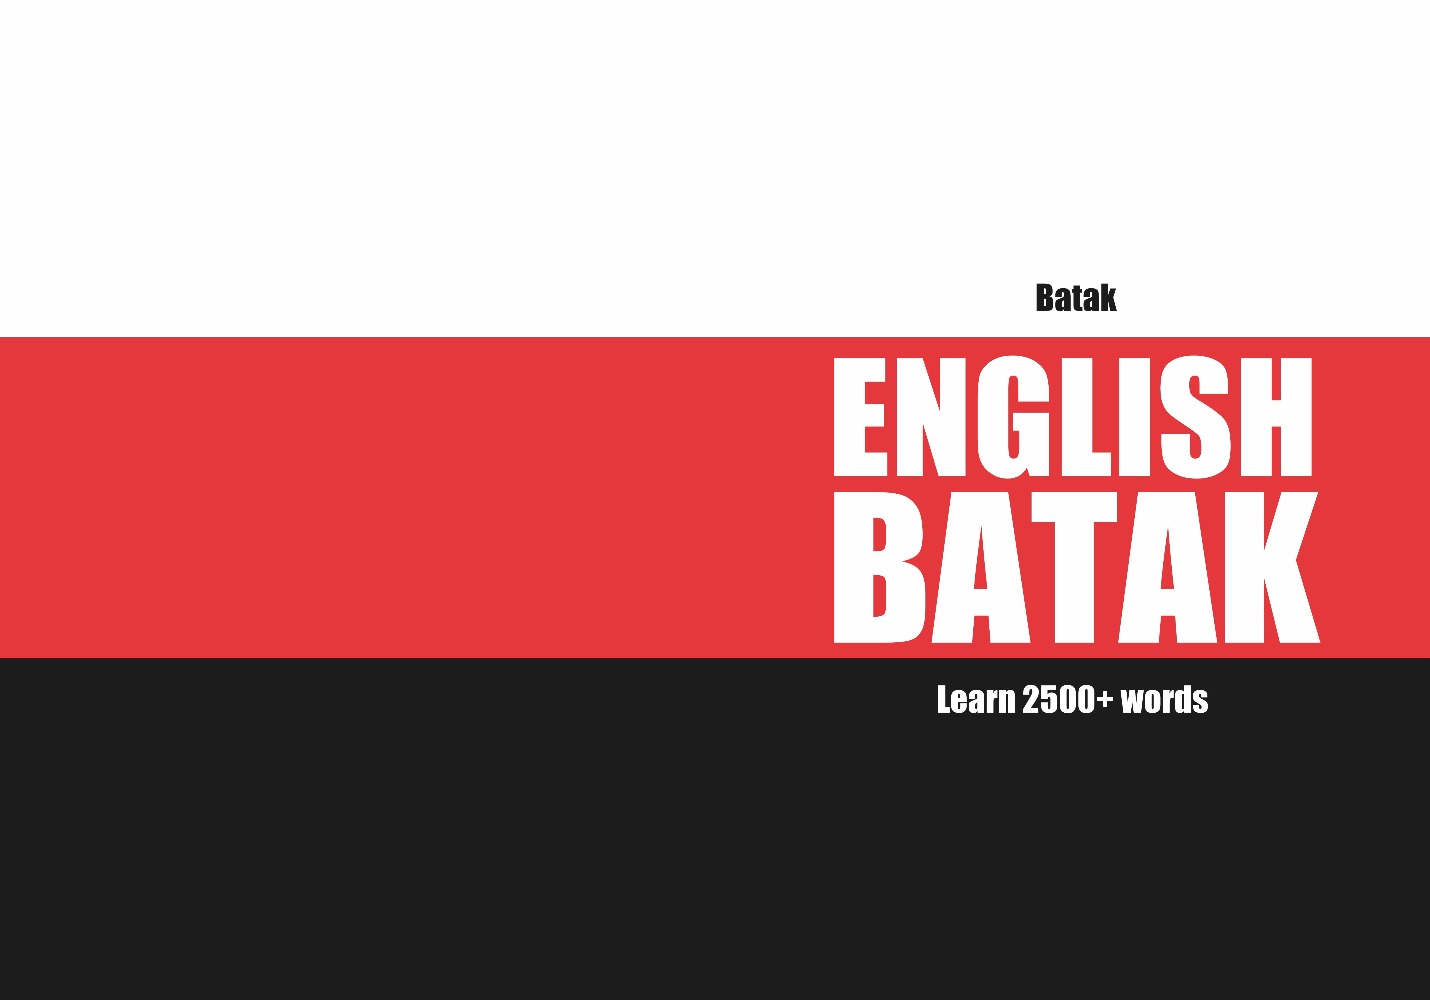 Batak language learning notebook cover